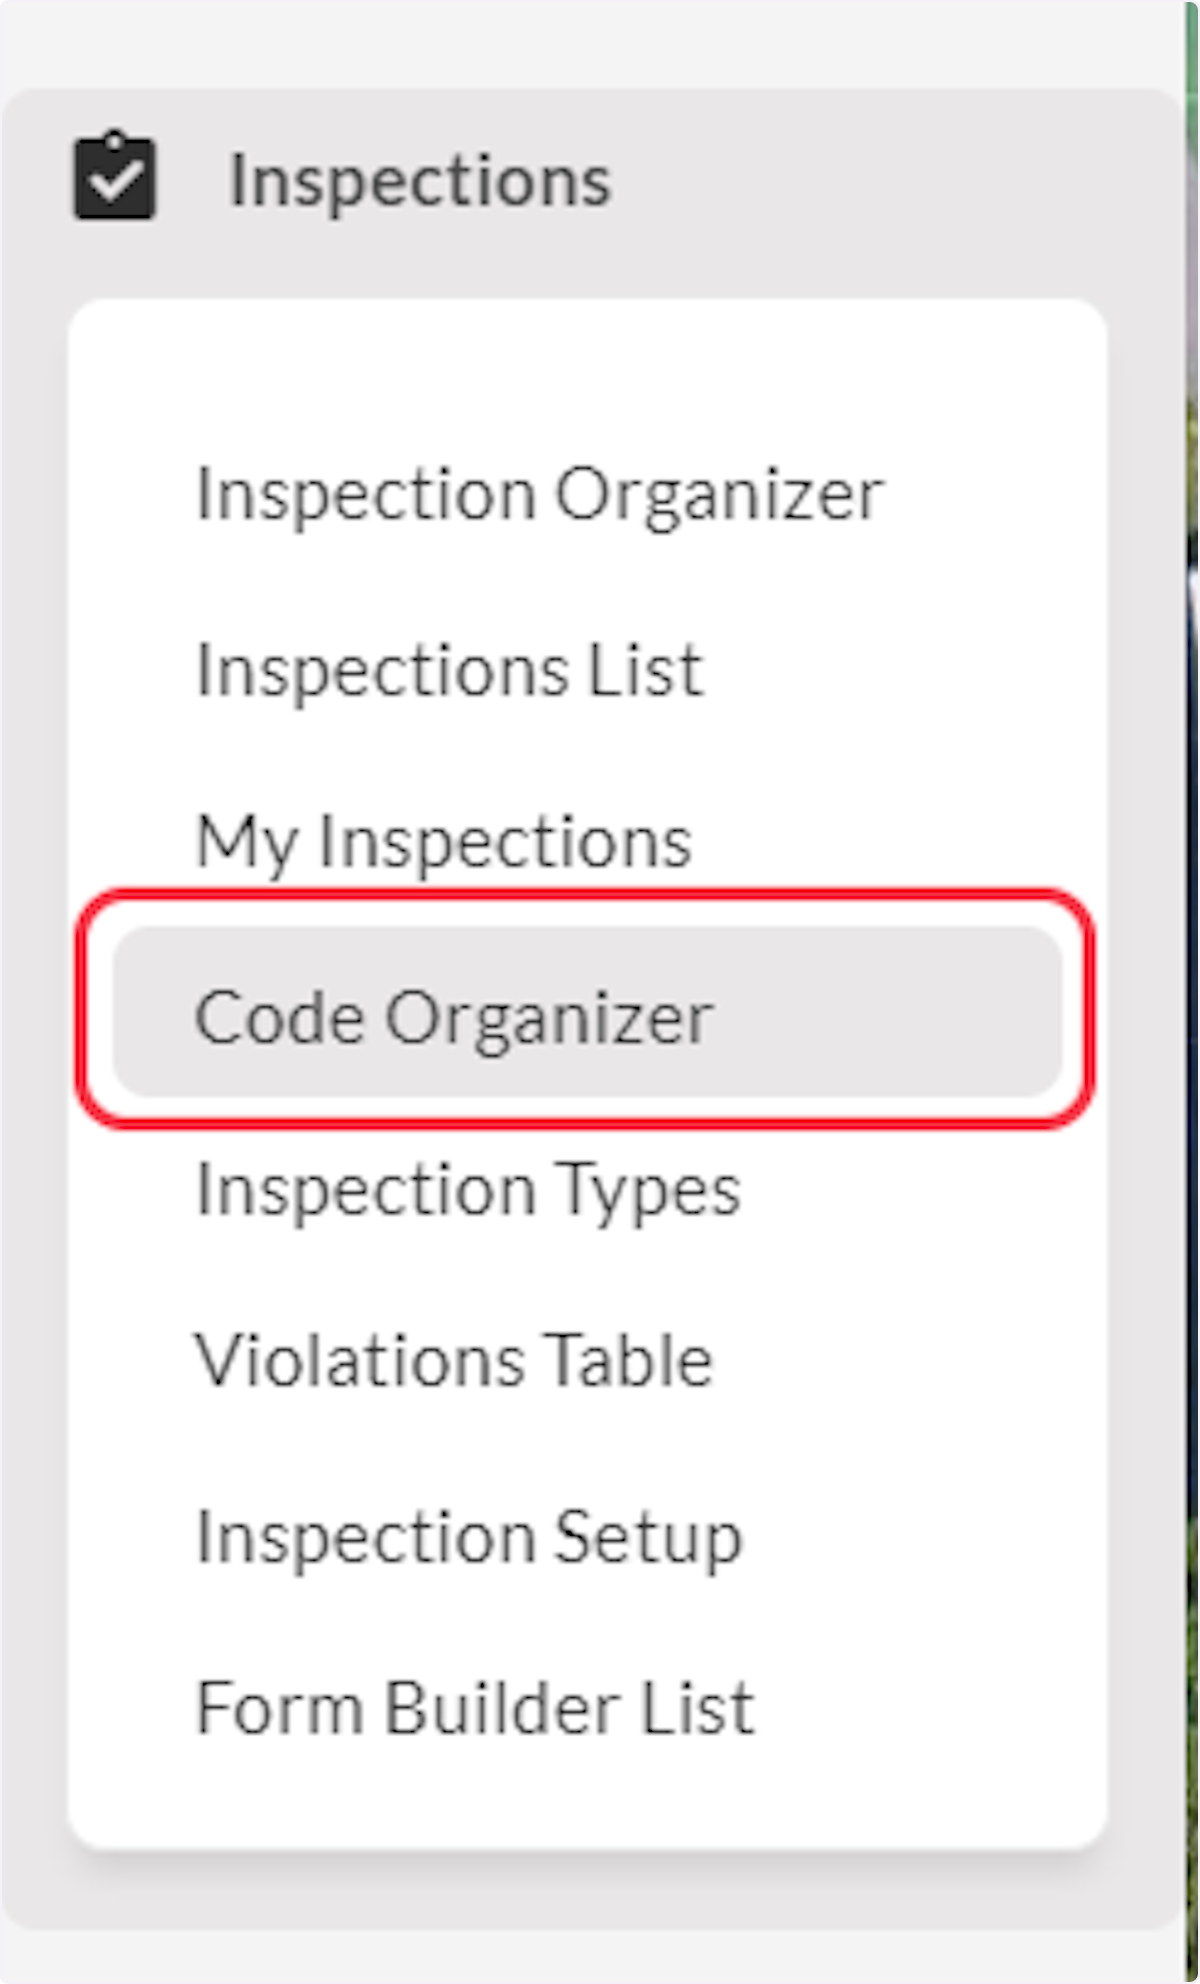 Click on Code Organizer.